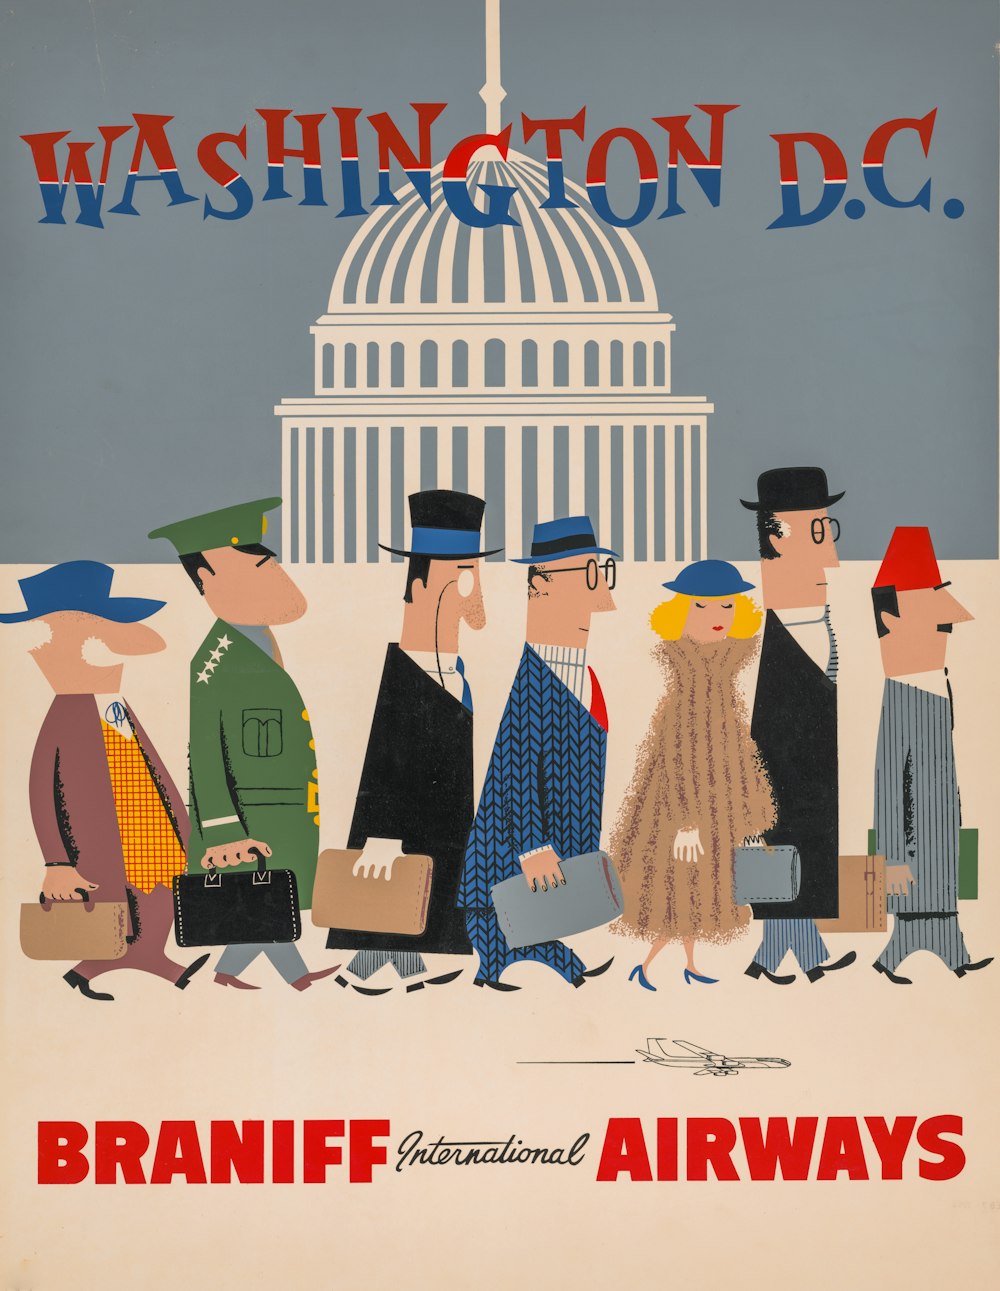 Washington, D.C. - Braniff International Airways